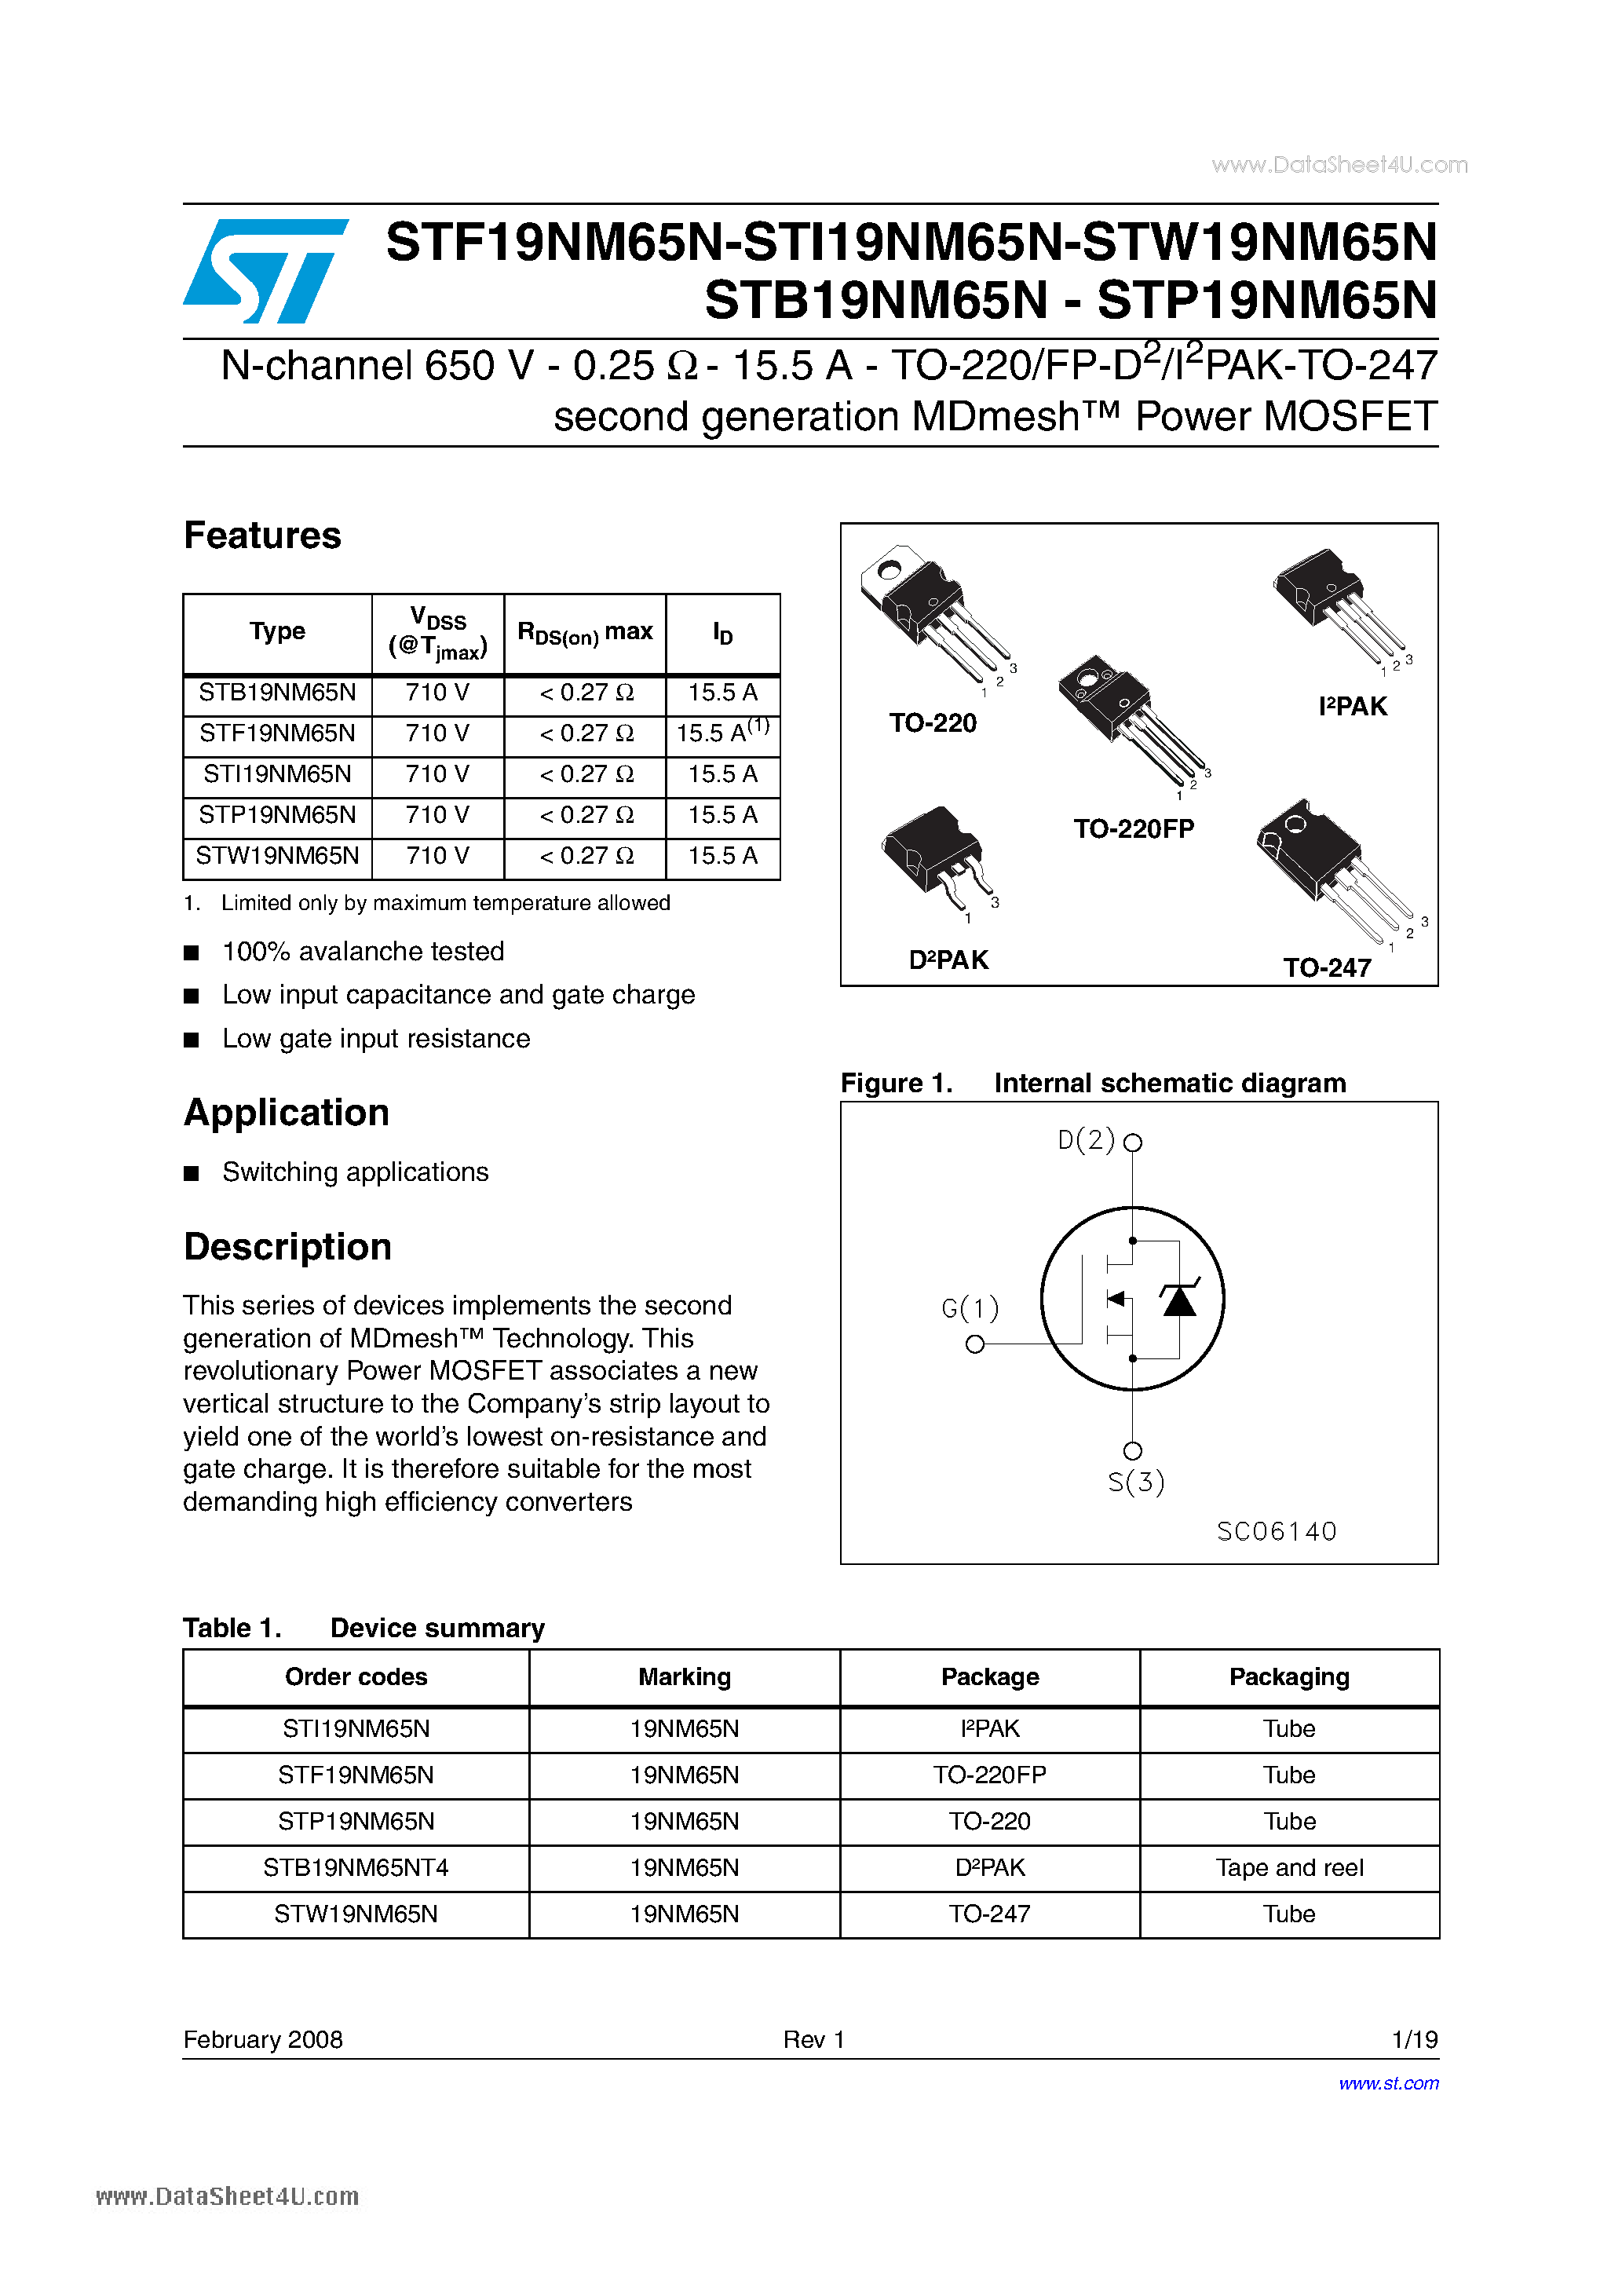 Datasheet STP19NM65N - Power MOSFET page 1